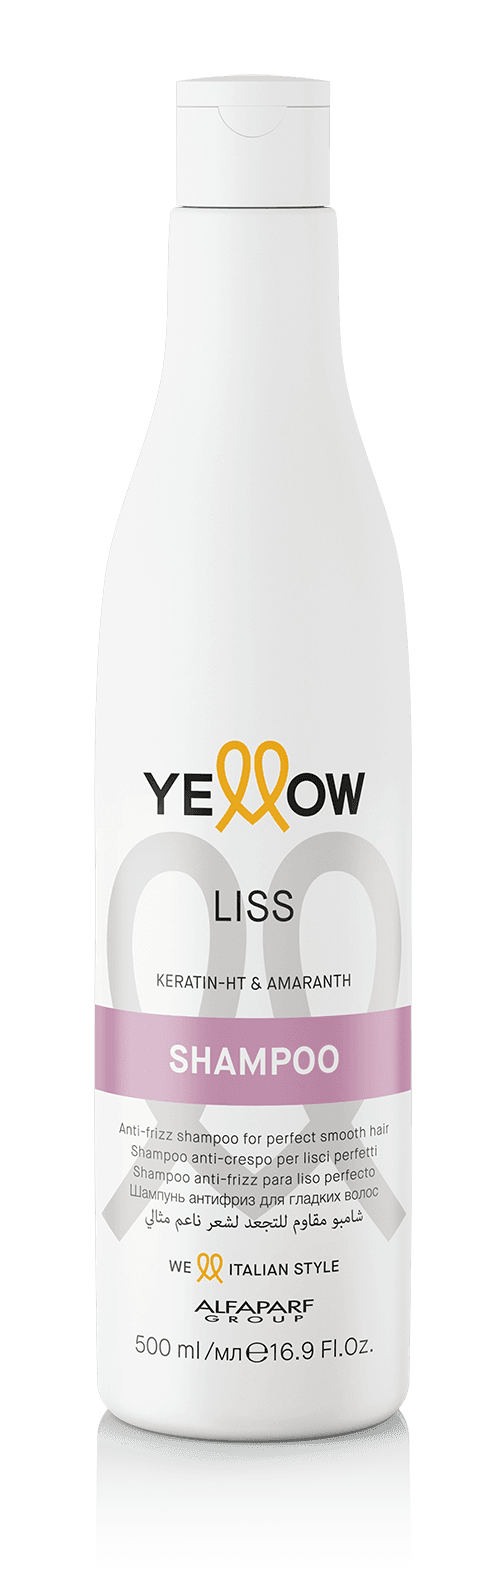 Slike YELLOW Šampon Liss 500ml